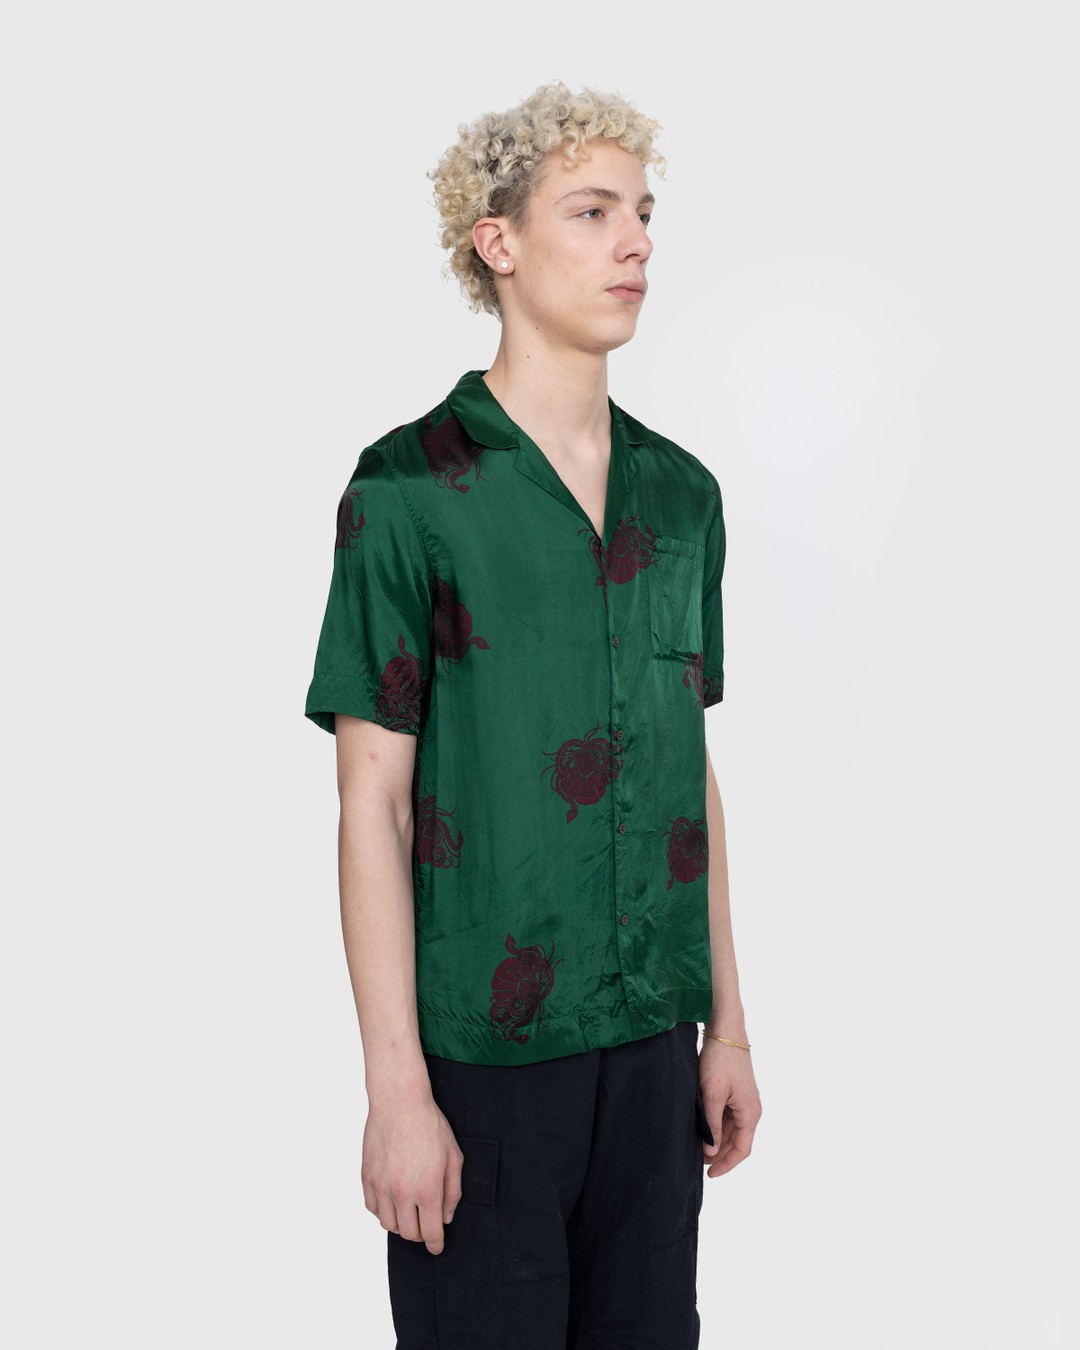 Dries van Noten – Carltone Shirt Bottle - Shortsleeve Shirts - Green - Image 4